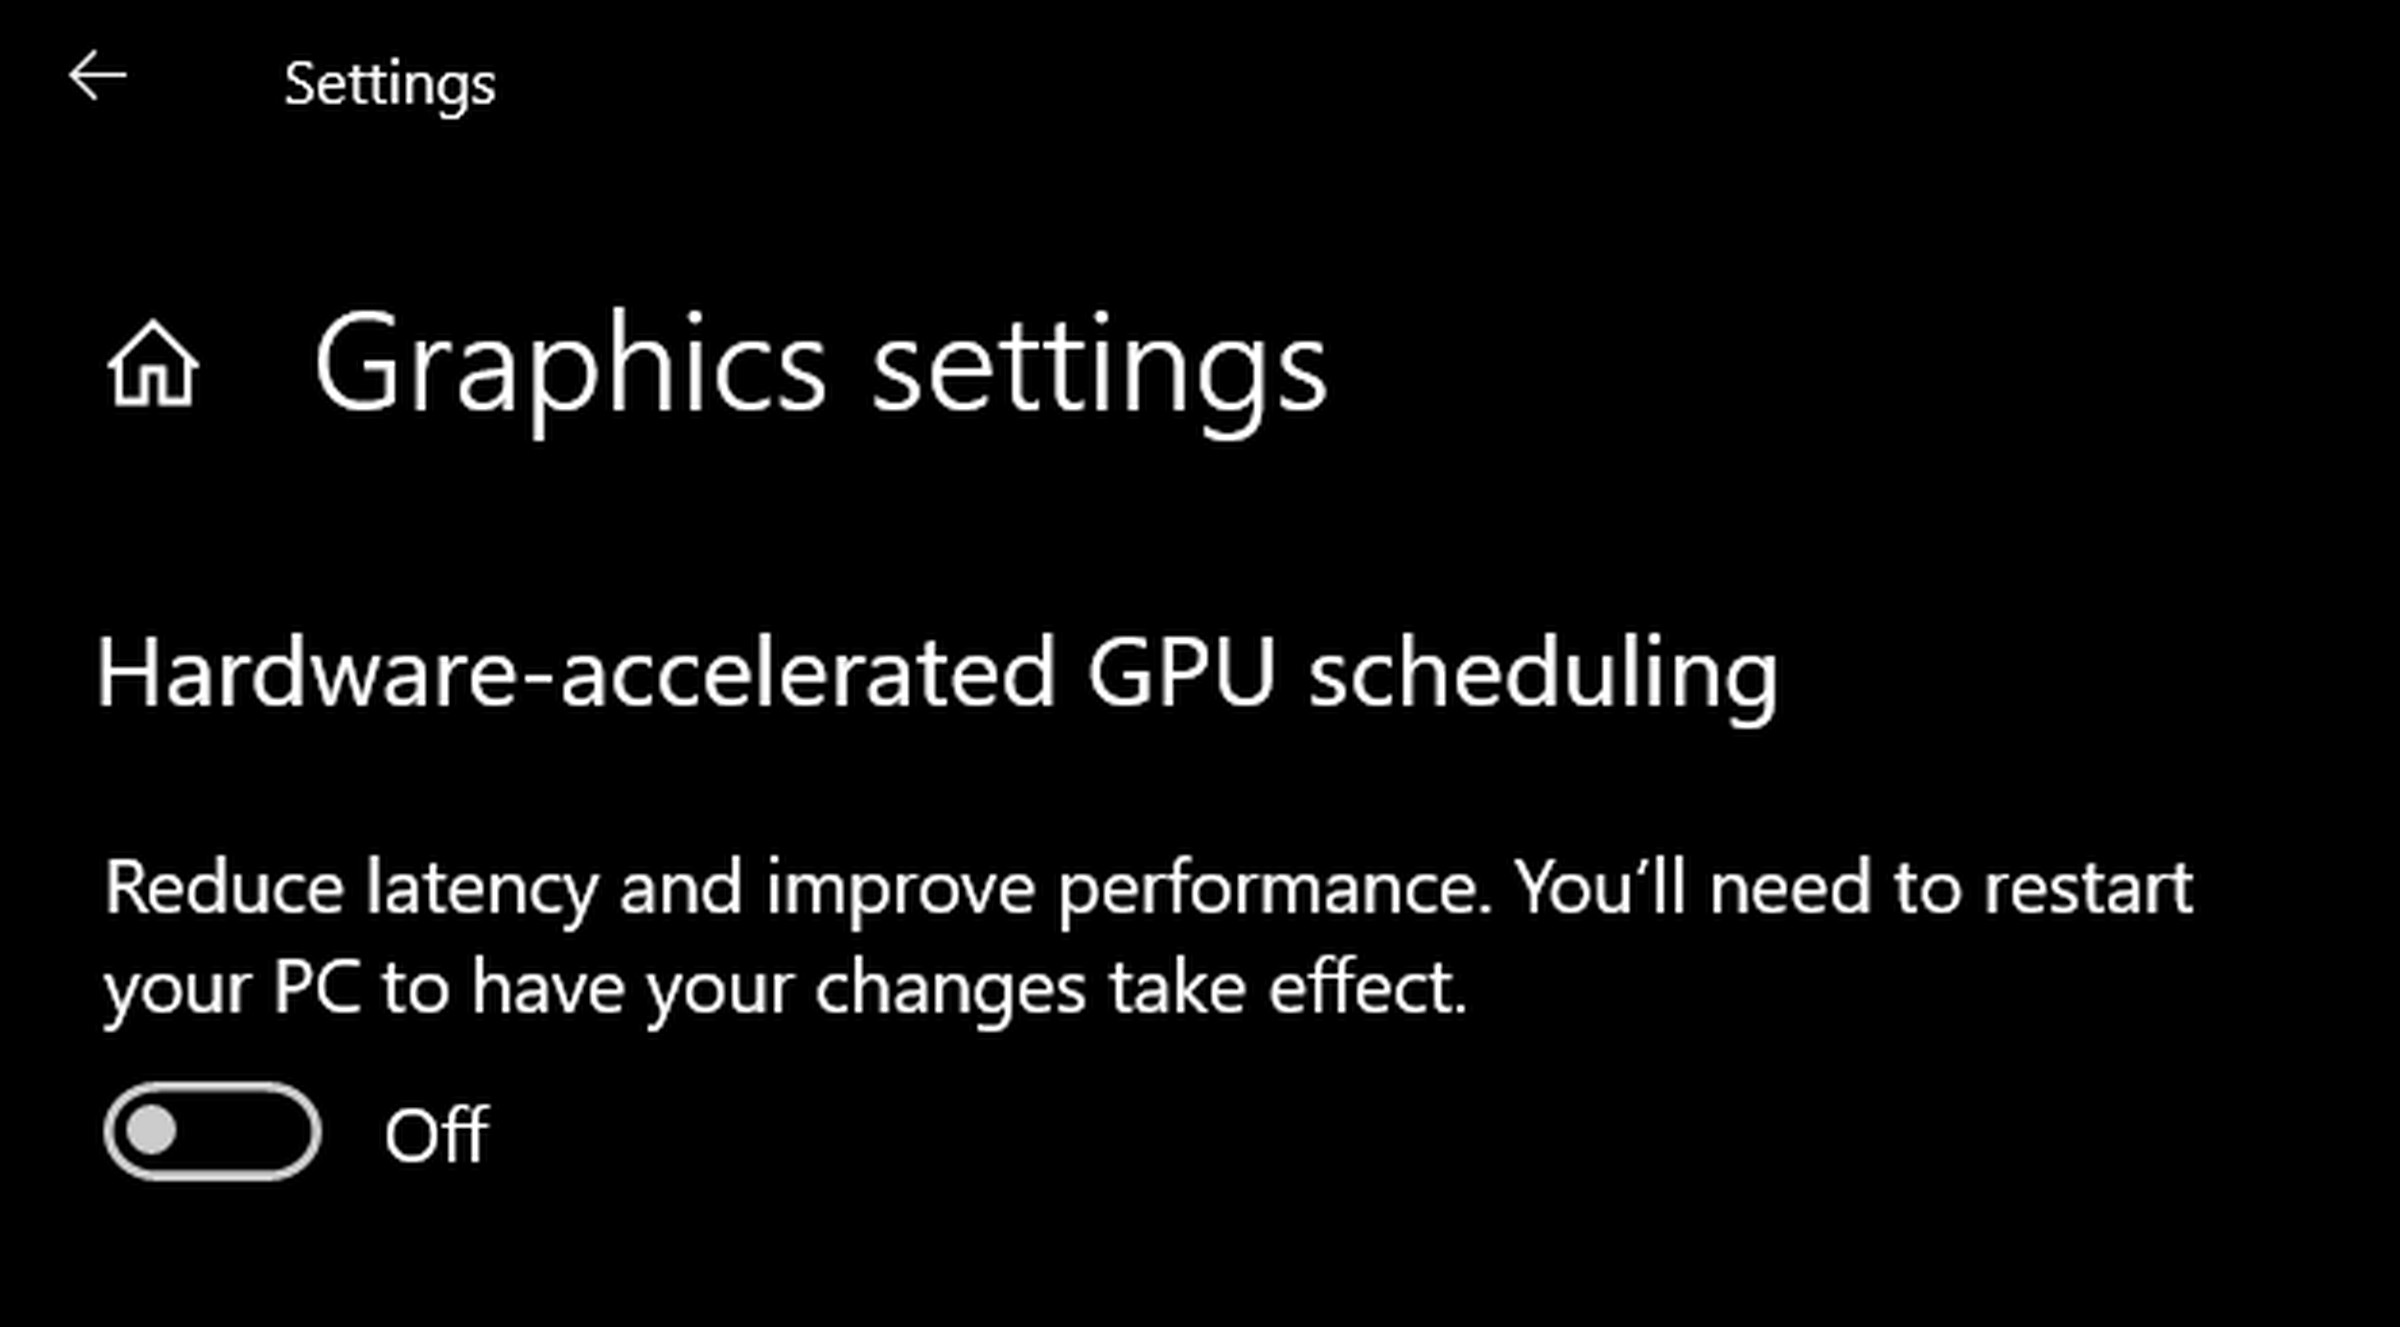 Windows 10’s new graphics setting.